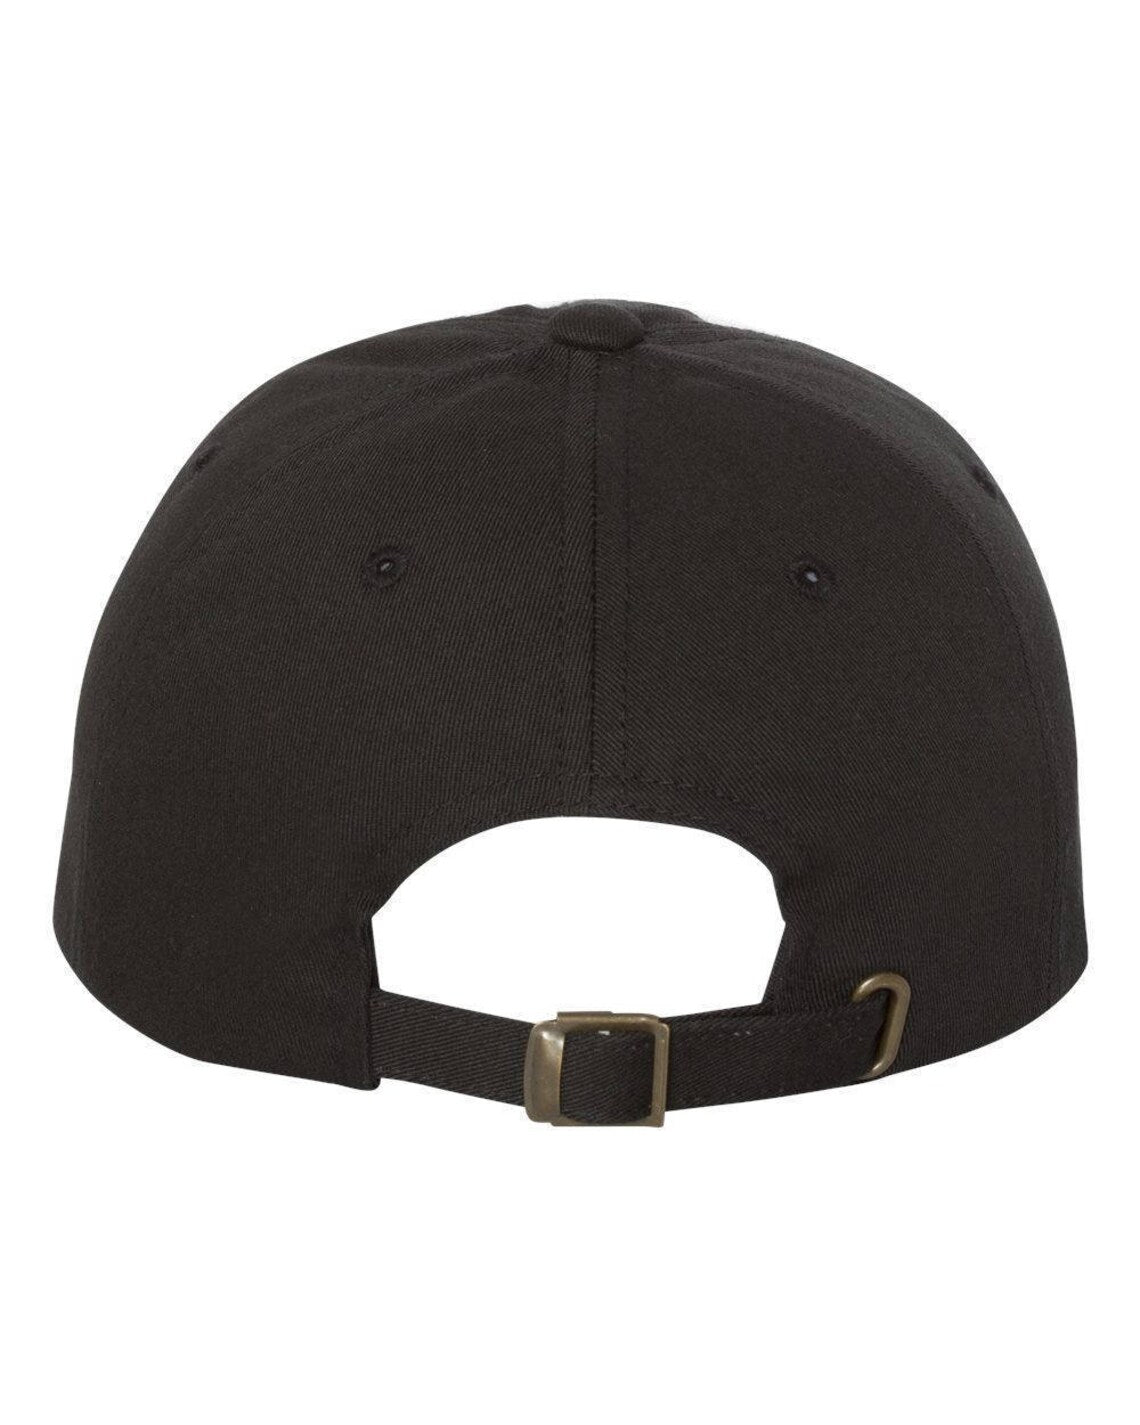 Back of Baseball hats - DSY Lifestyle